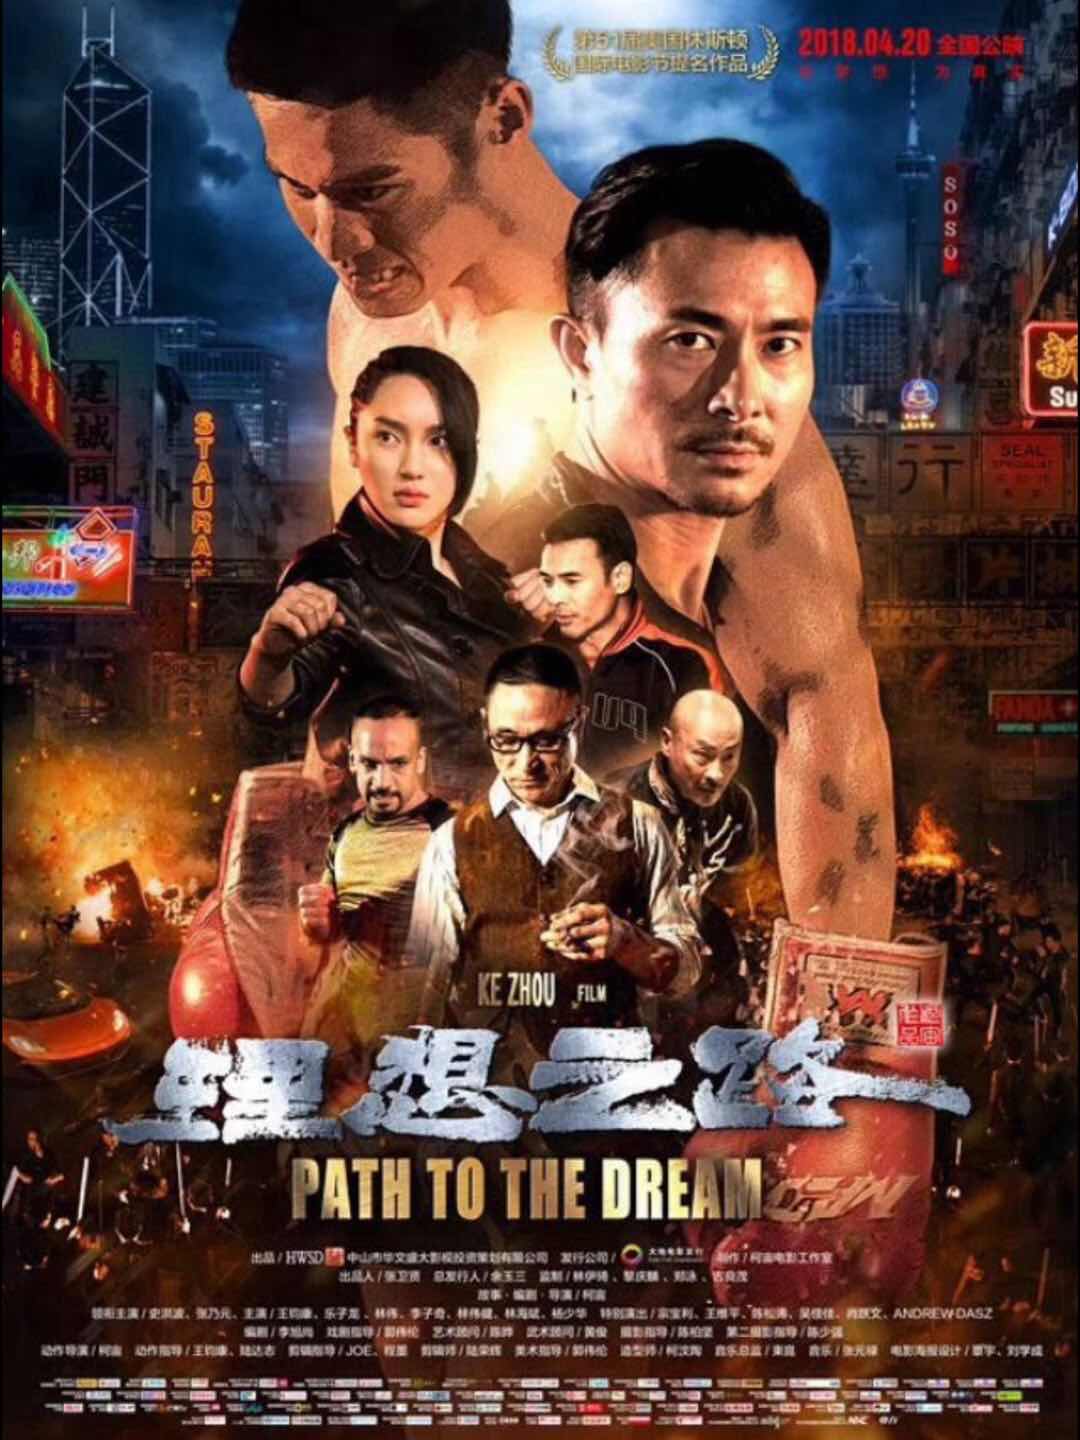 Nonton film Path to the Dream layarkaca21 indoxx1 ganool online streaming terbaru